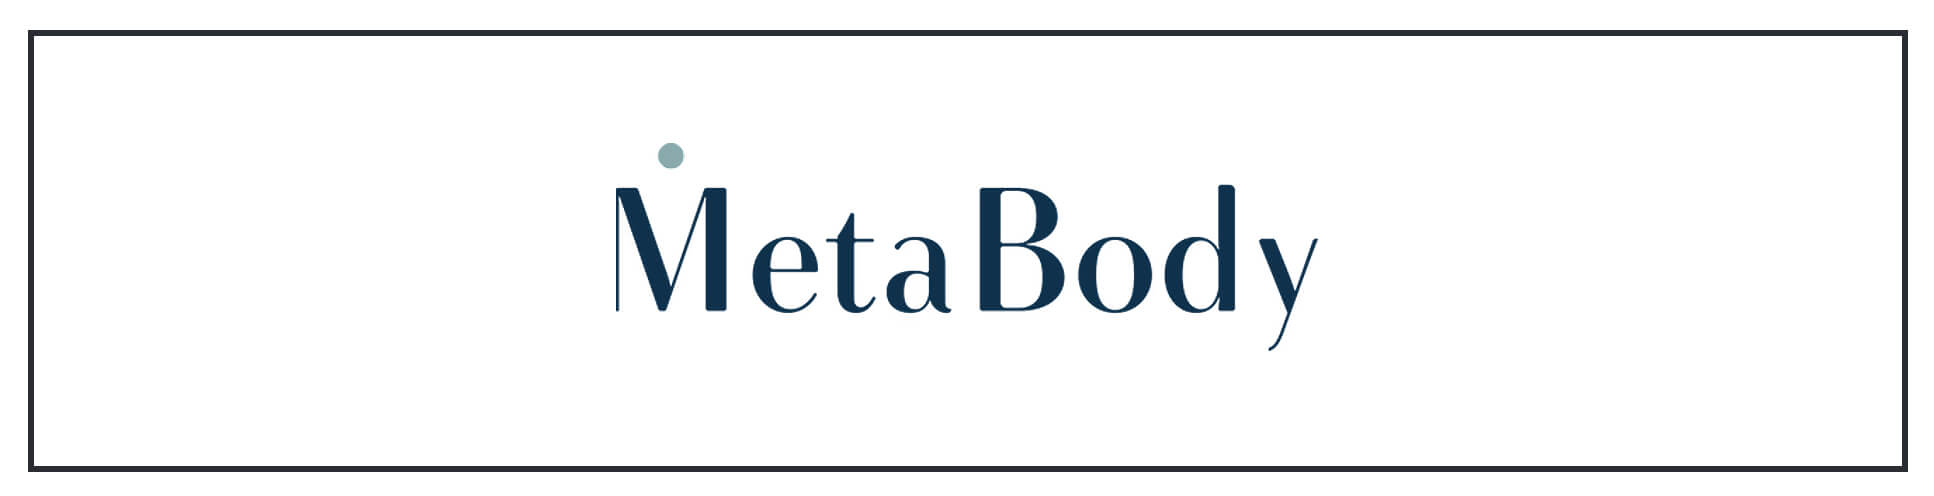 Metabody logo on a white background.